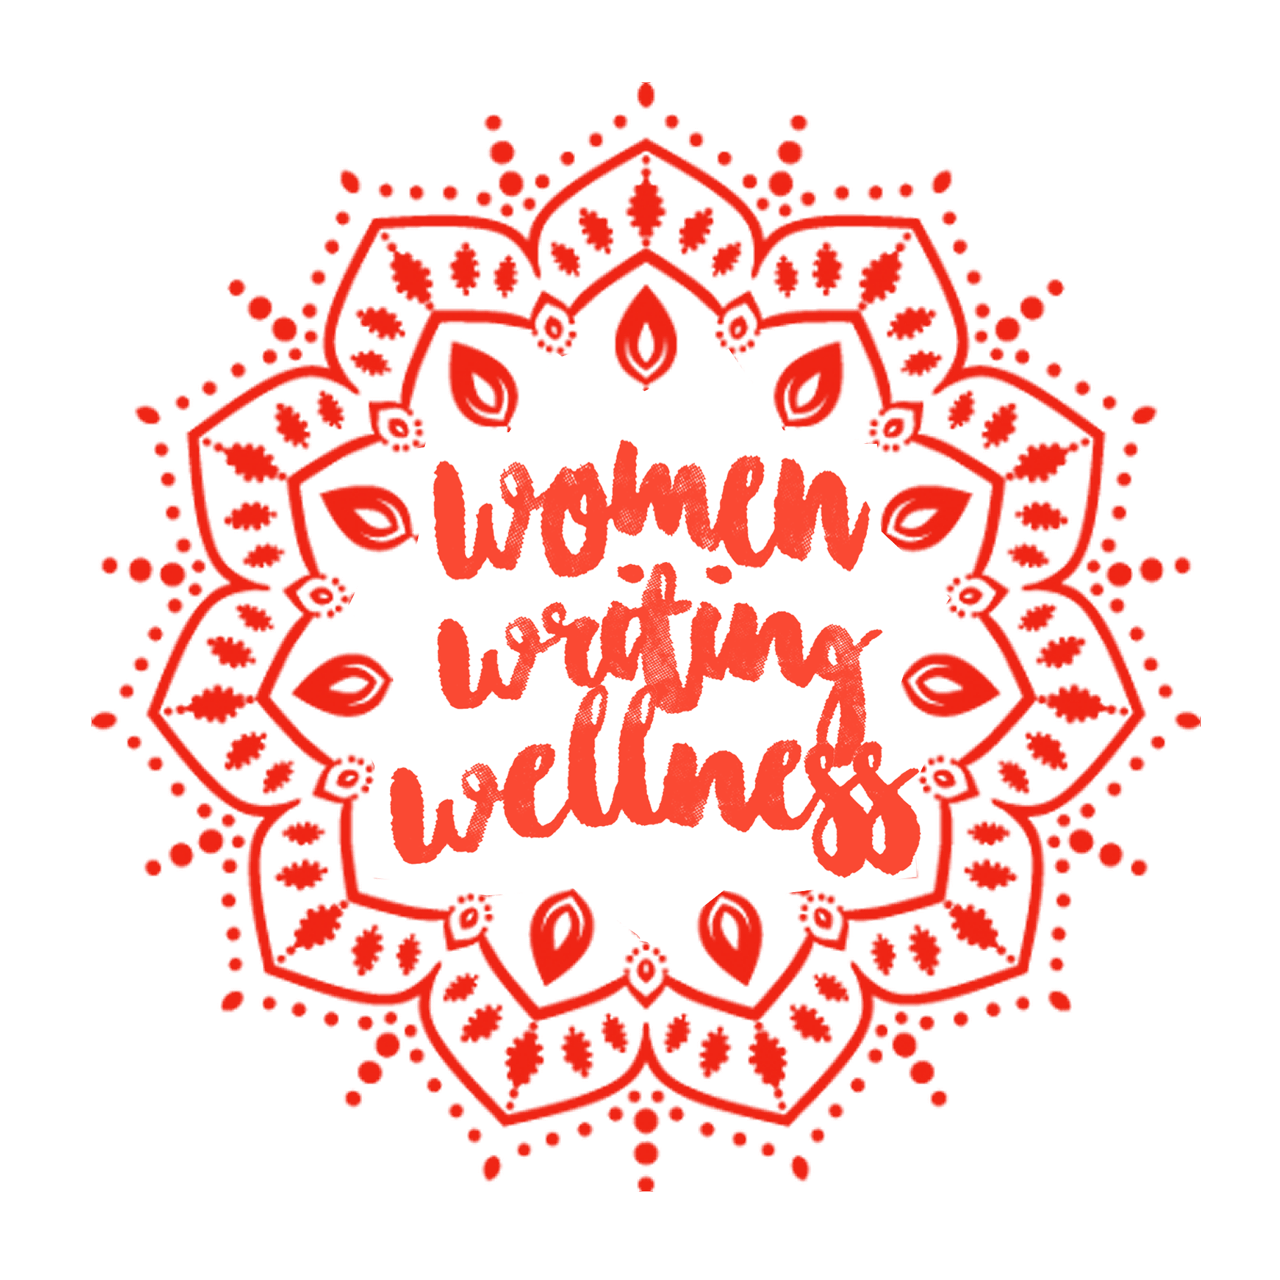 Women Writing Wellness